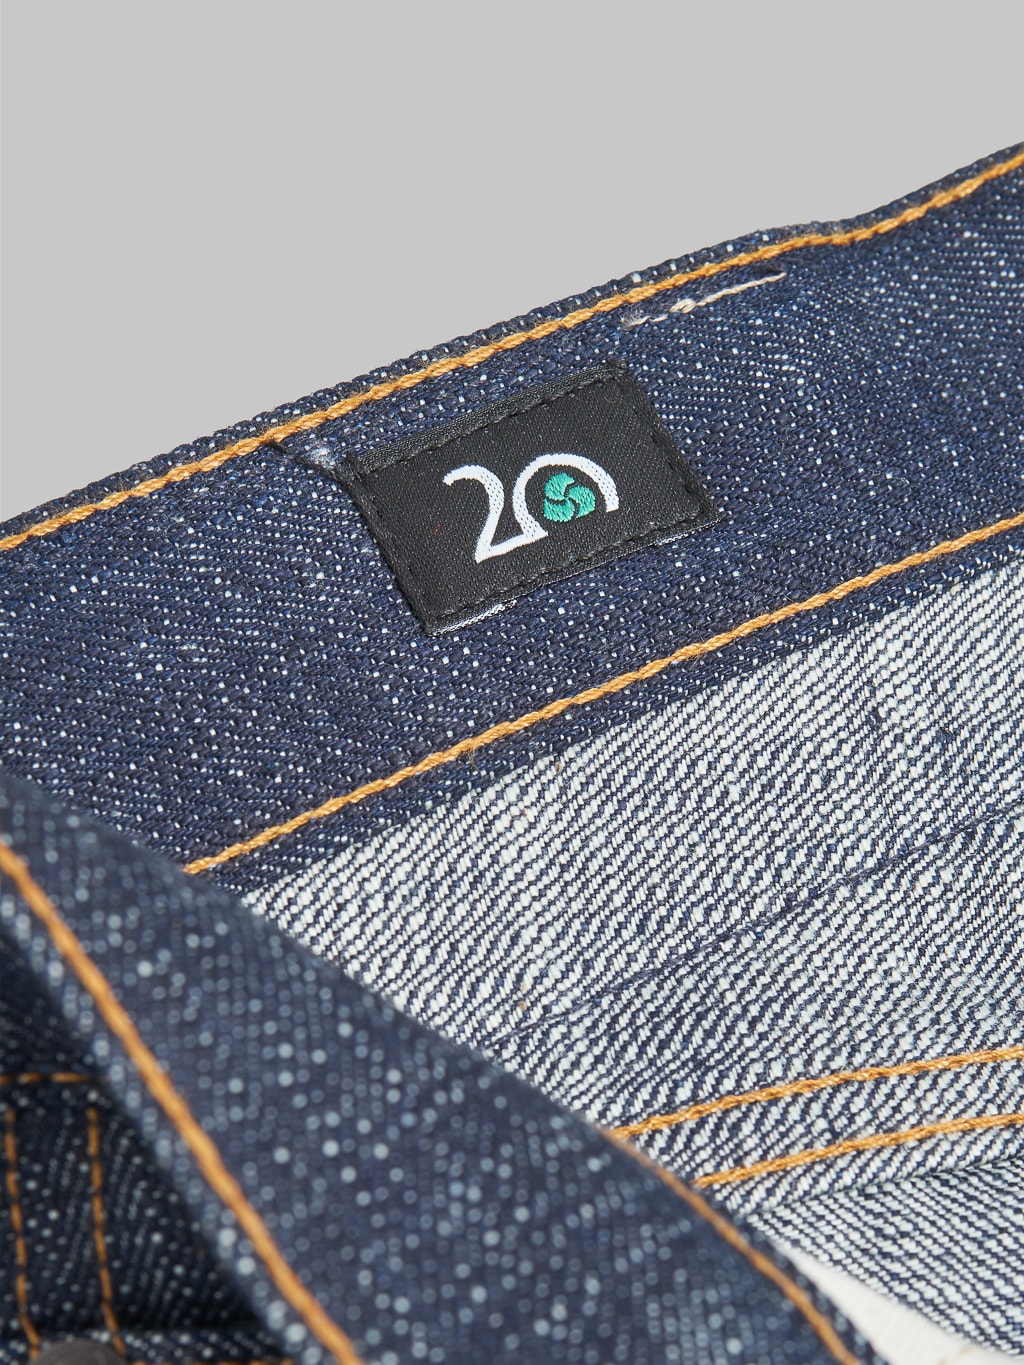 3sixteen CT 102xn 20th Anniversary Natural Indigo Jeans interior tag